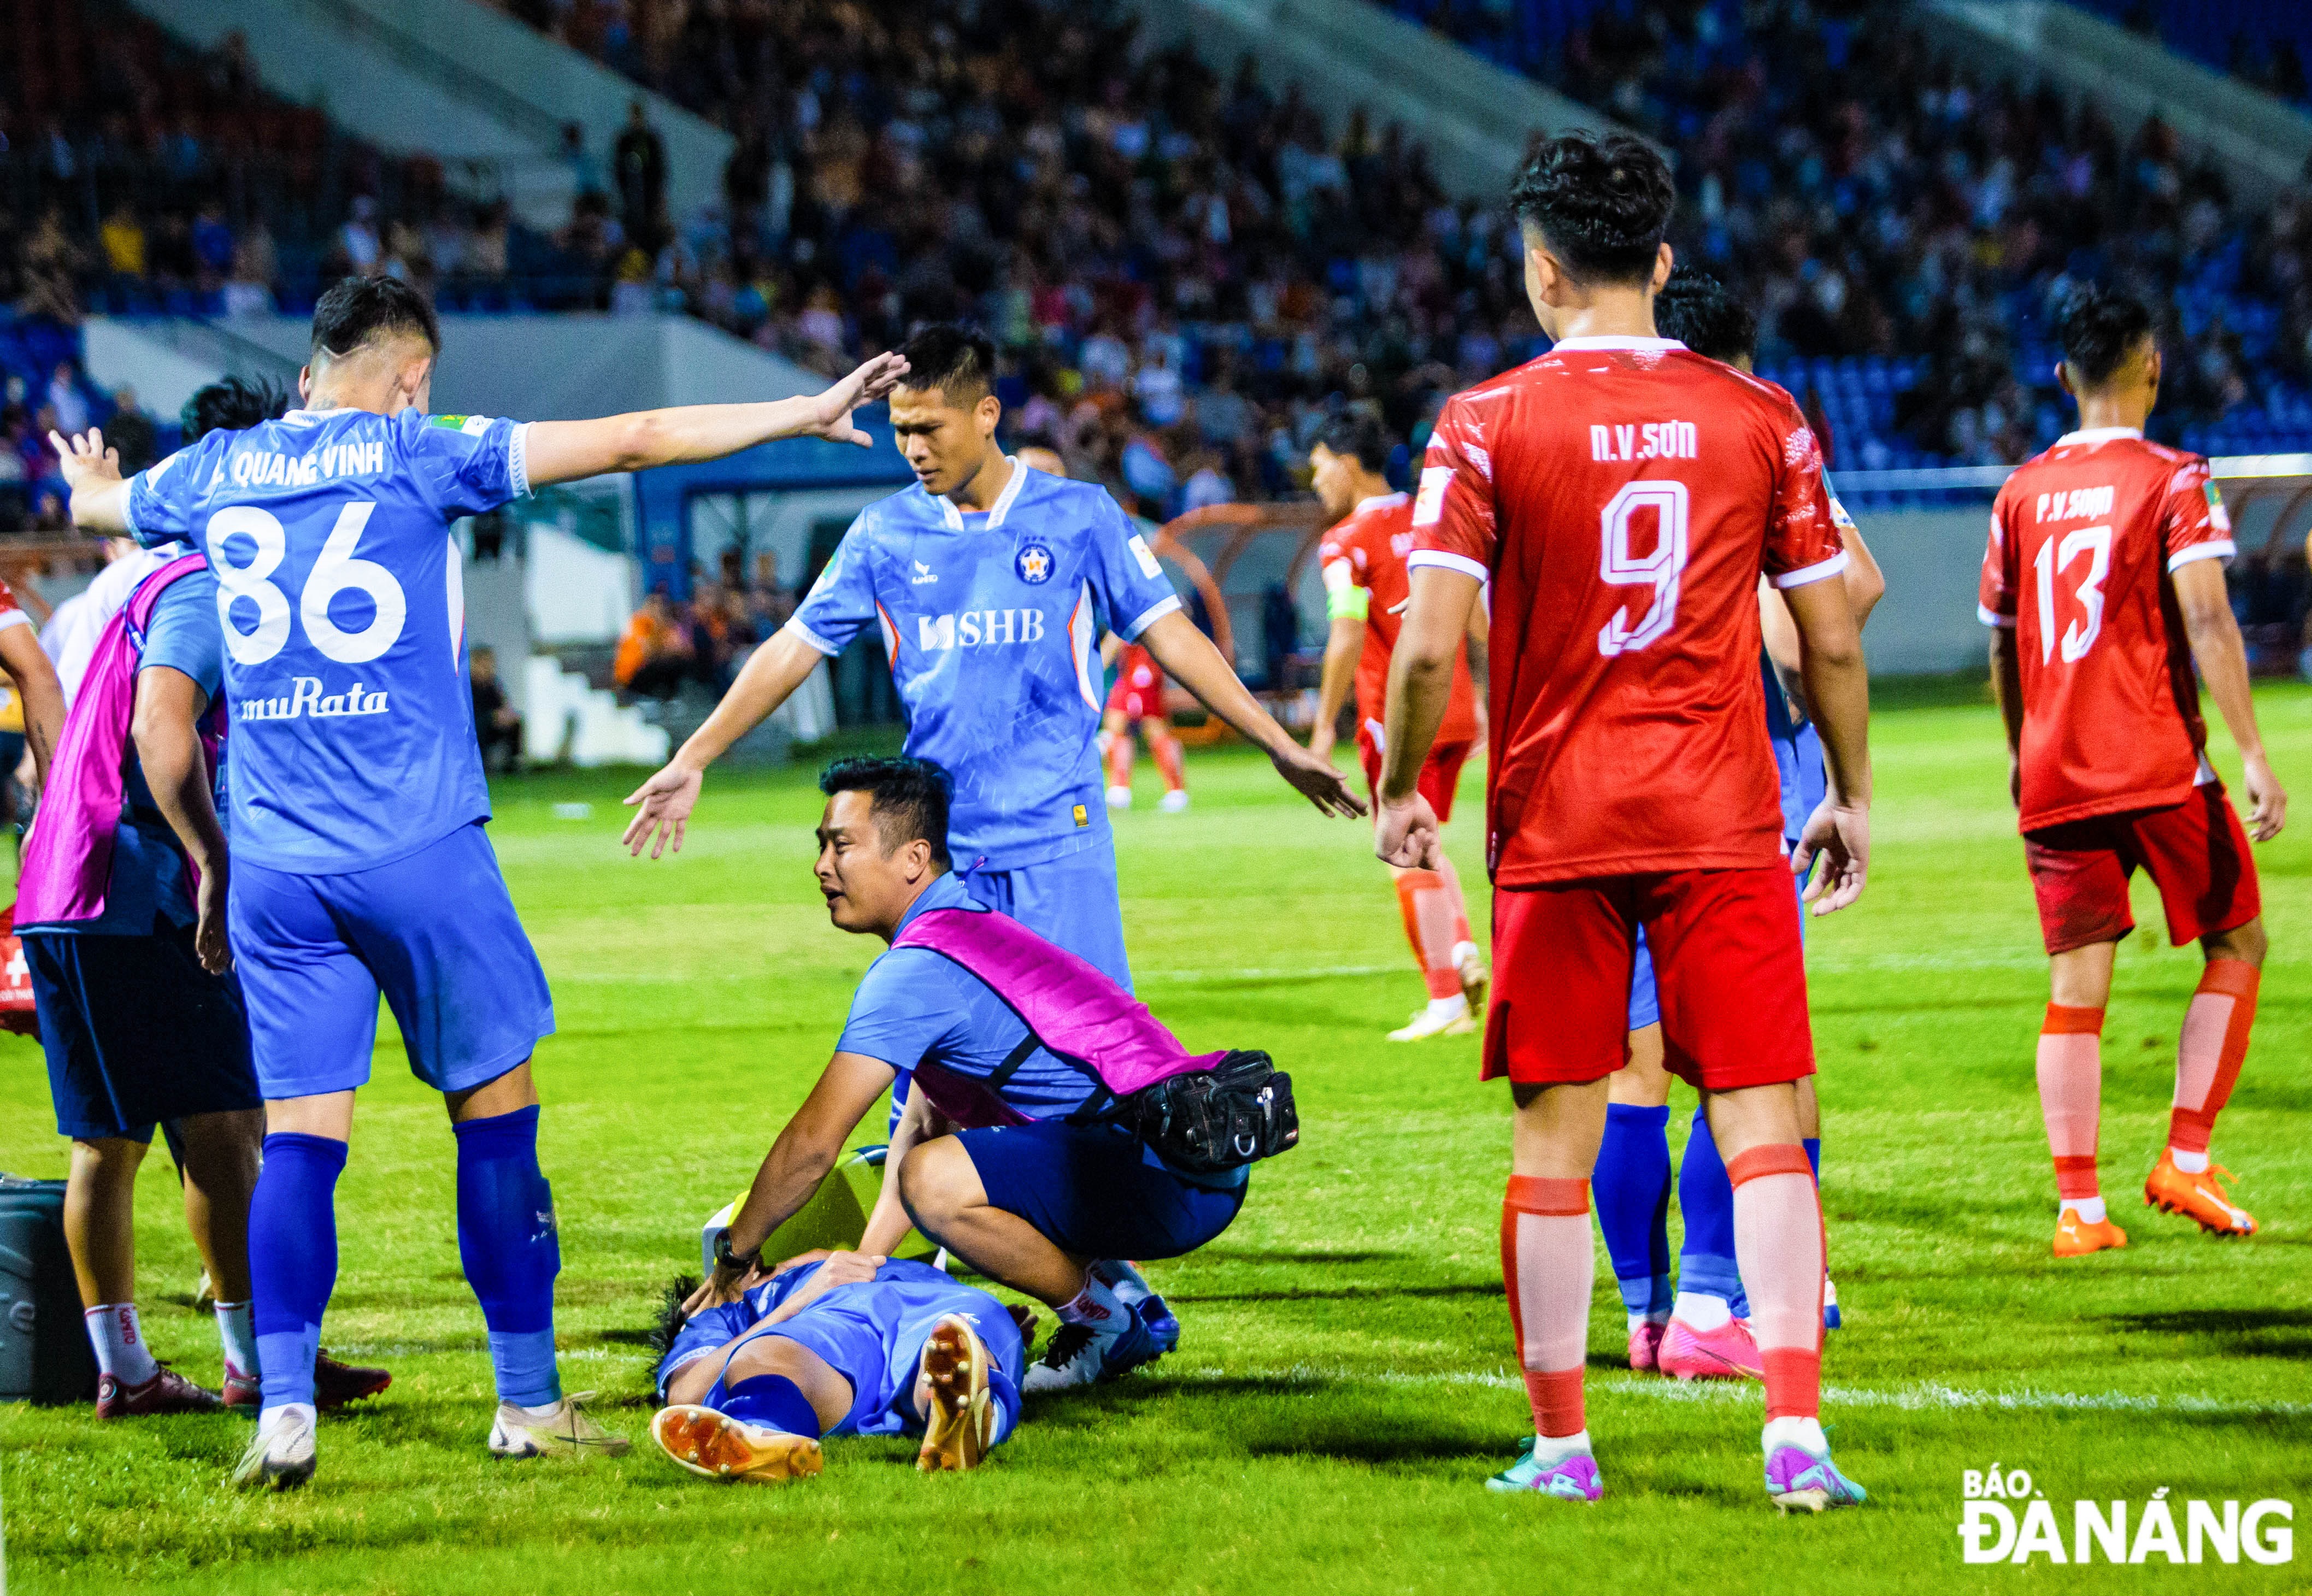 SHB DN’s striker Ha Minh Tuan suffered an injury in the 51st minute.